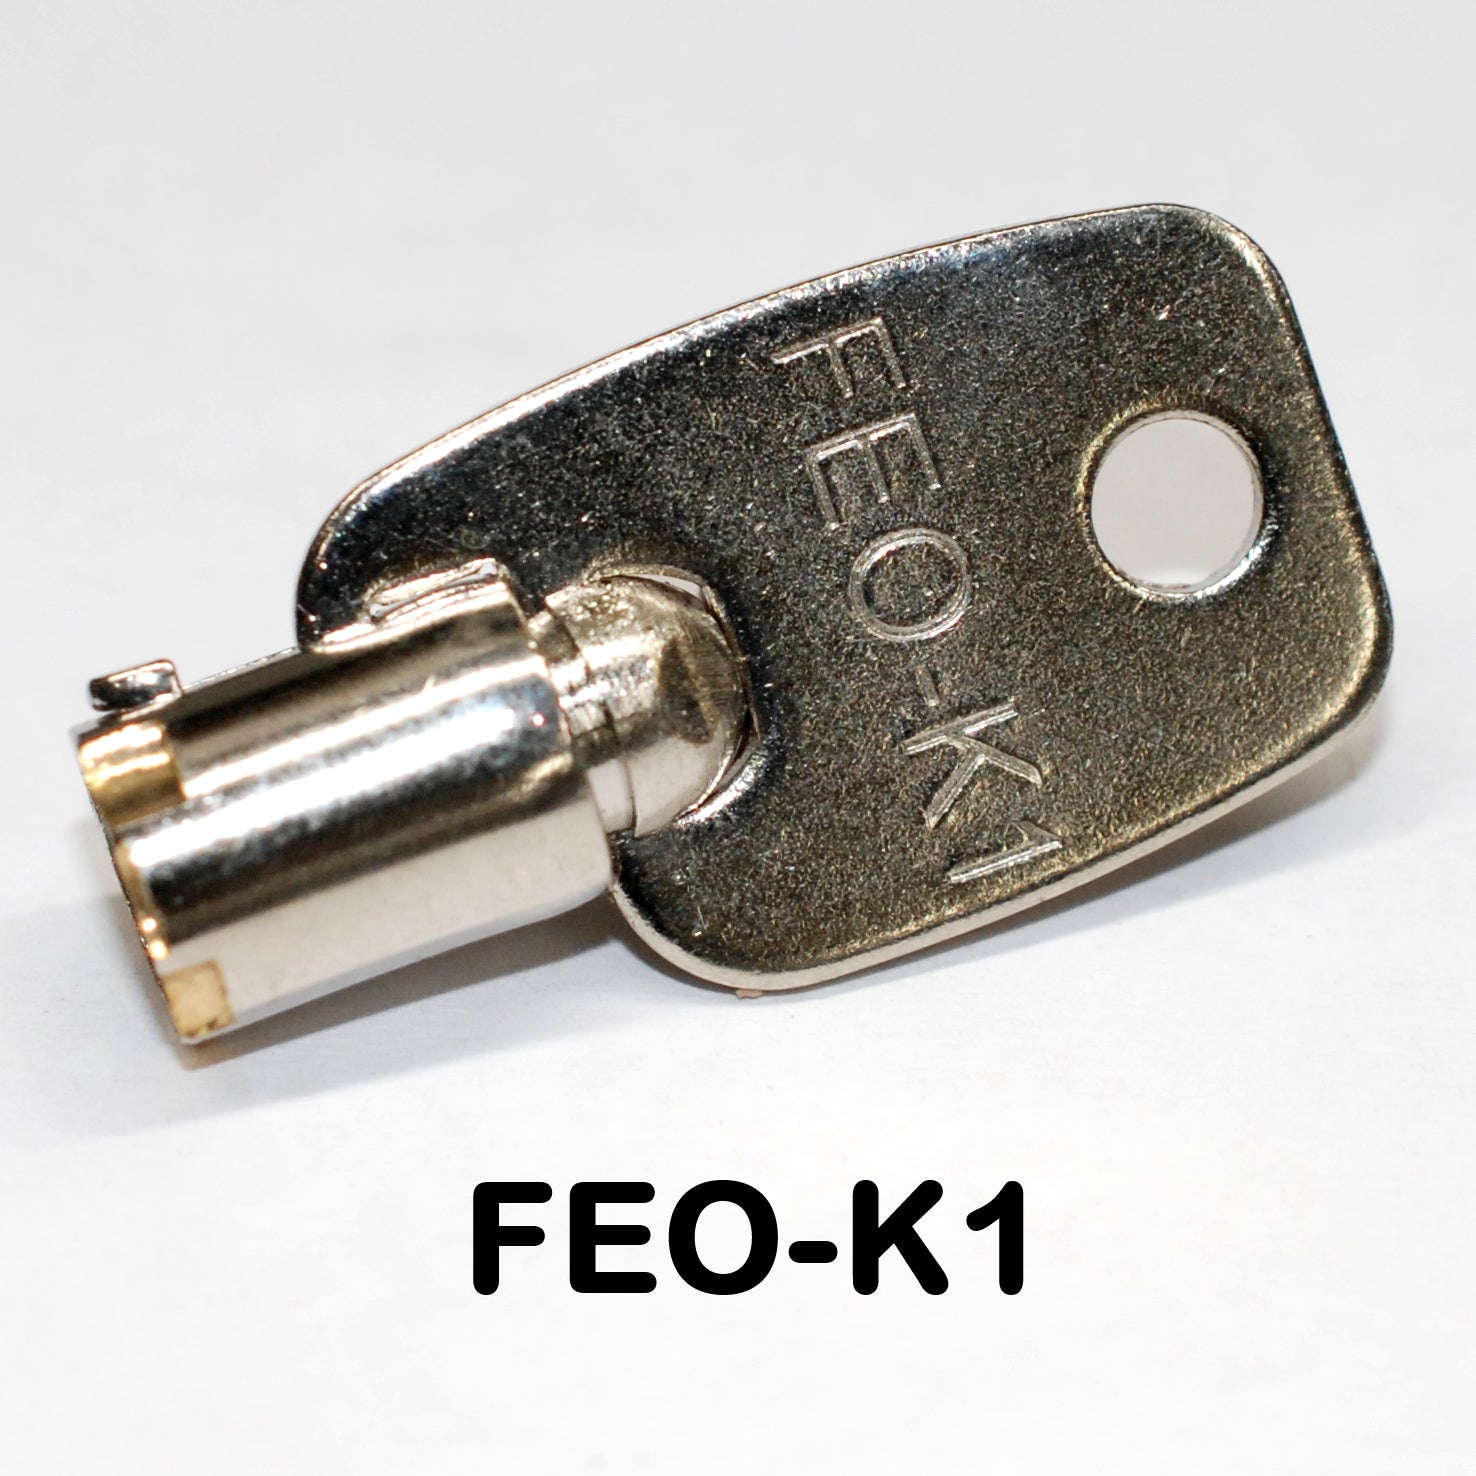 FEOK1 Cabinet Lock with 2 FEO-K1 keys